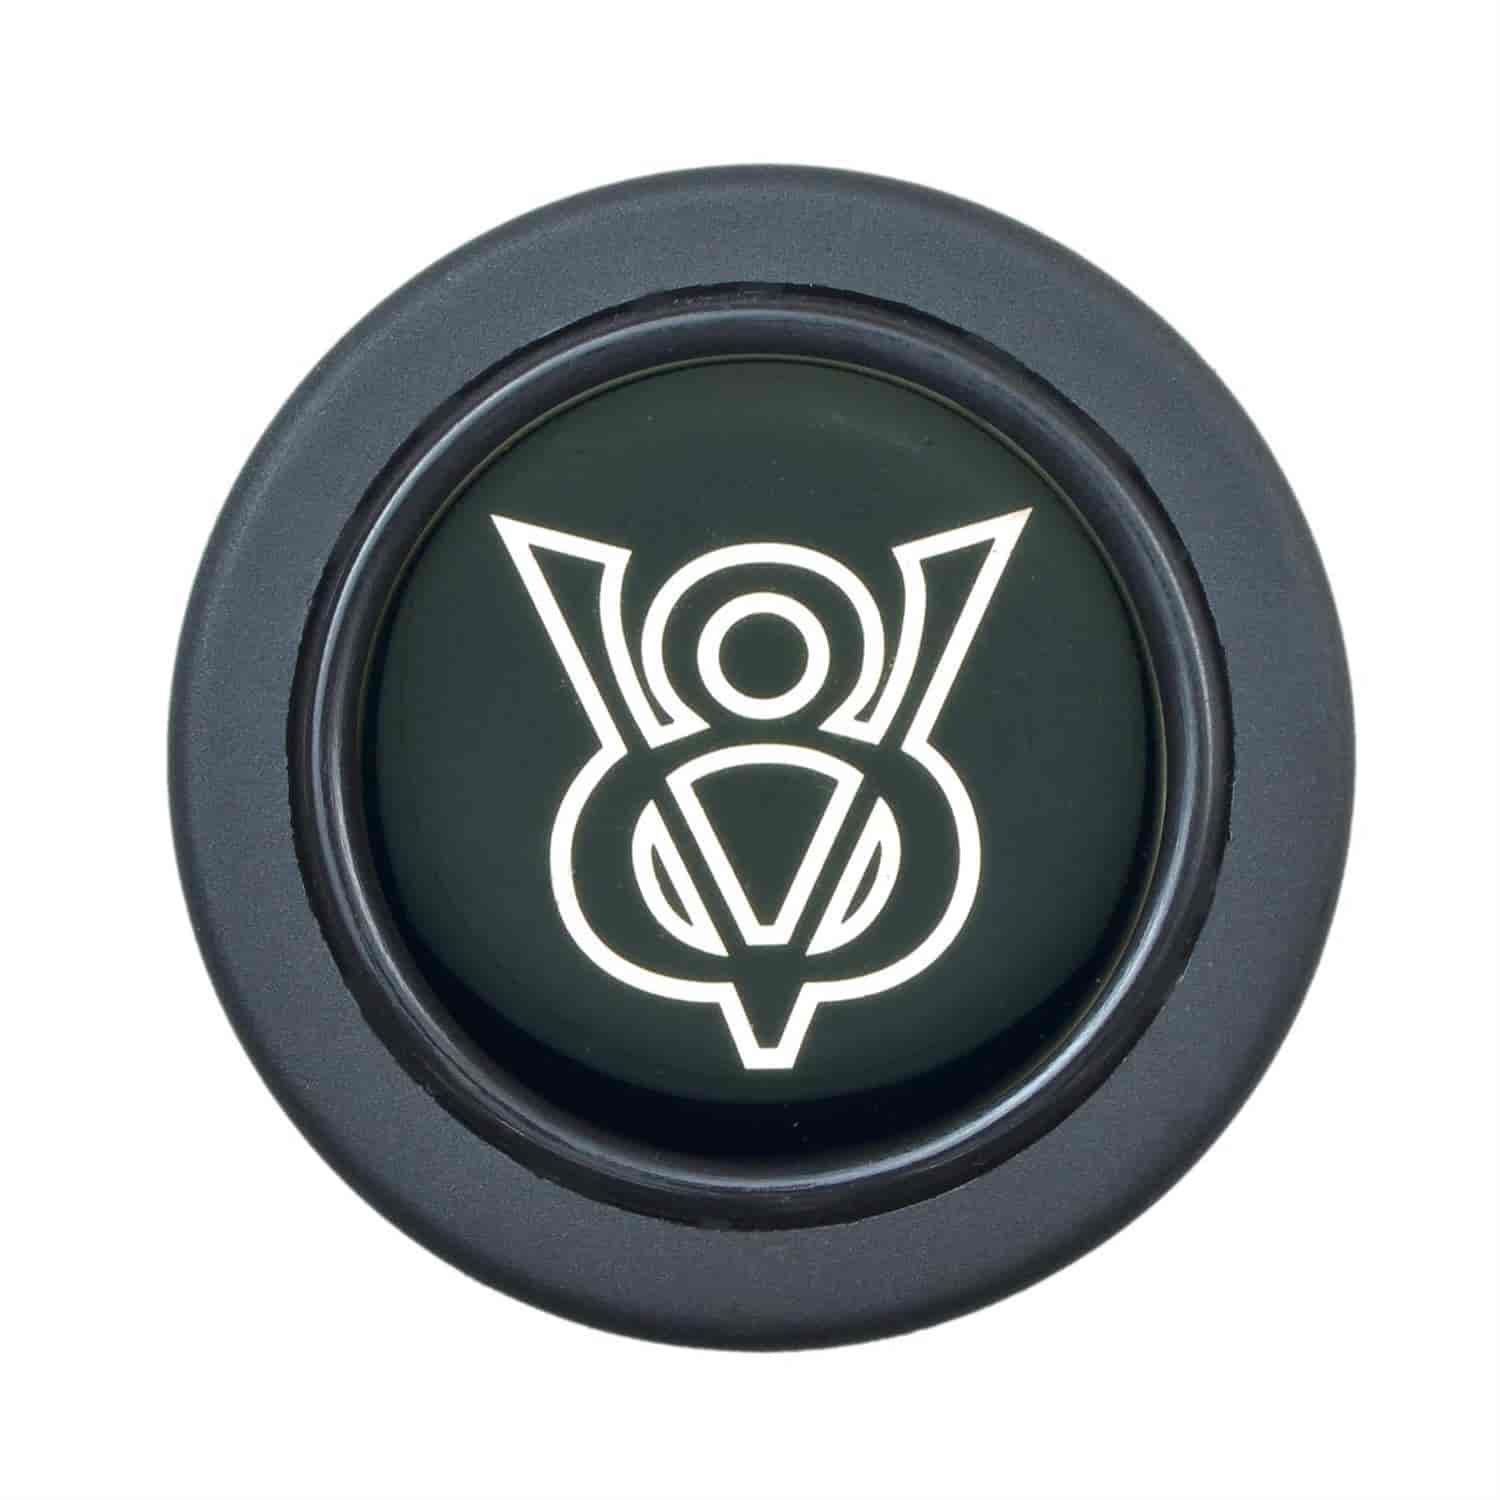 Euro Horn Button V8 Emblem - Black Anodized